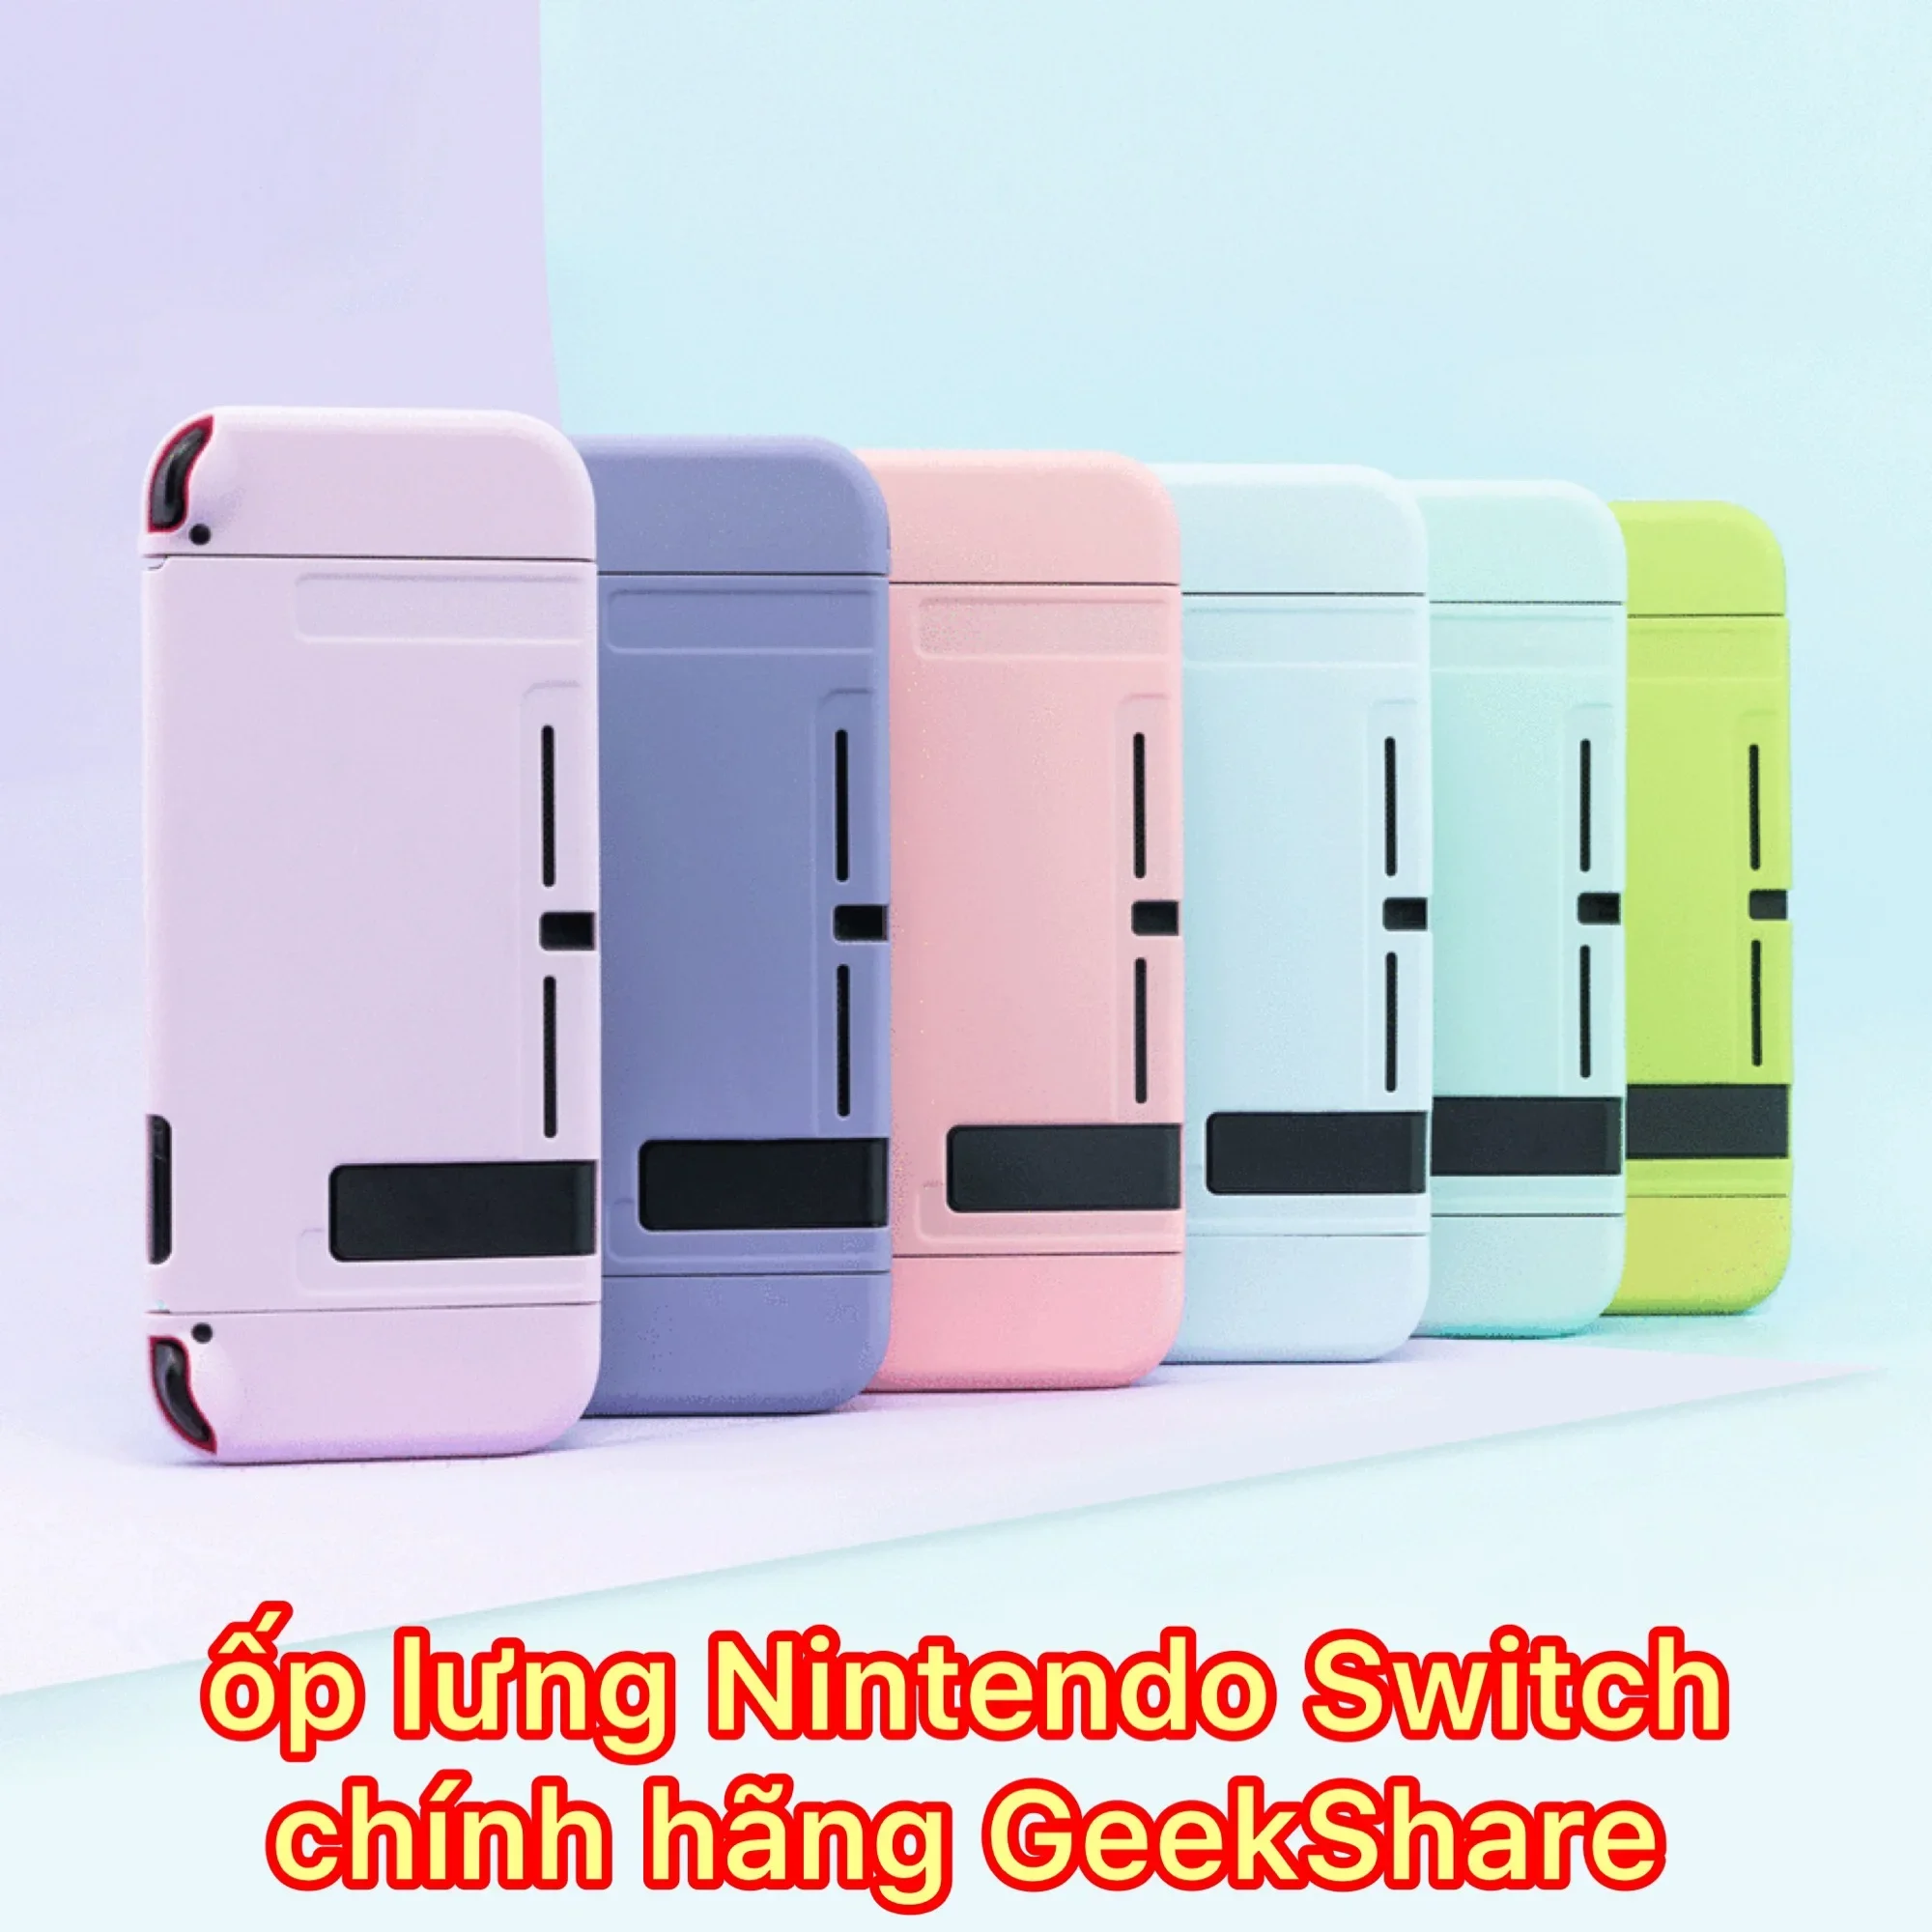 Ốp lưng Nintendo Switch hãng Geekshare đủ mầu case ốp nintendo switch chính hãng geekshare